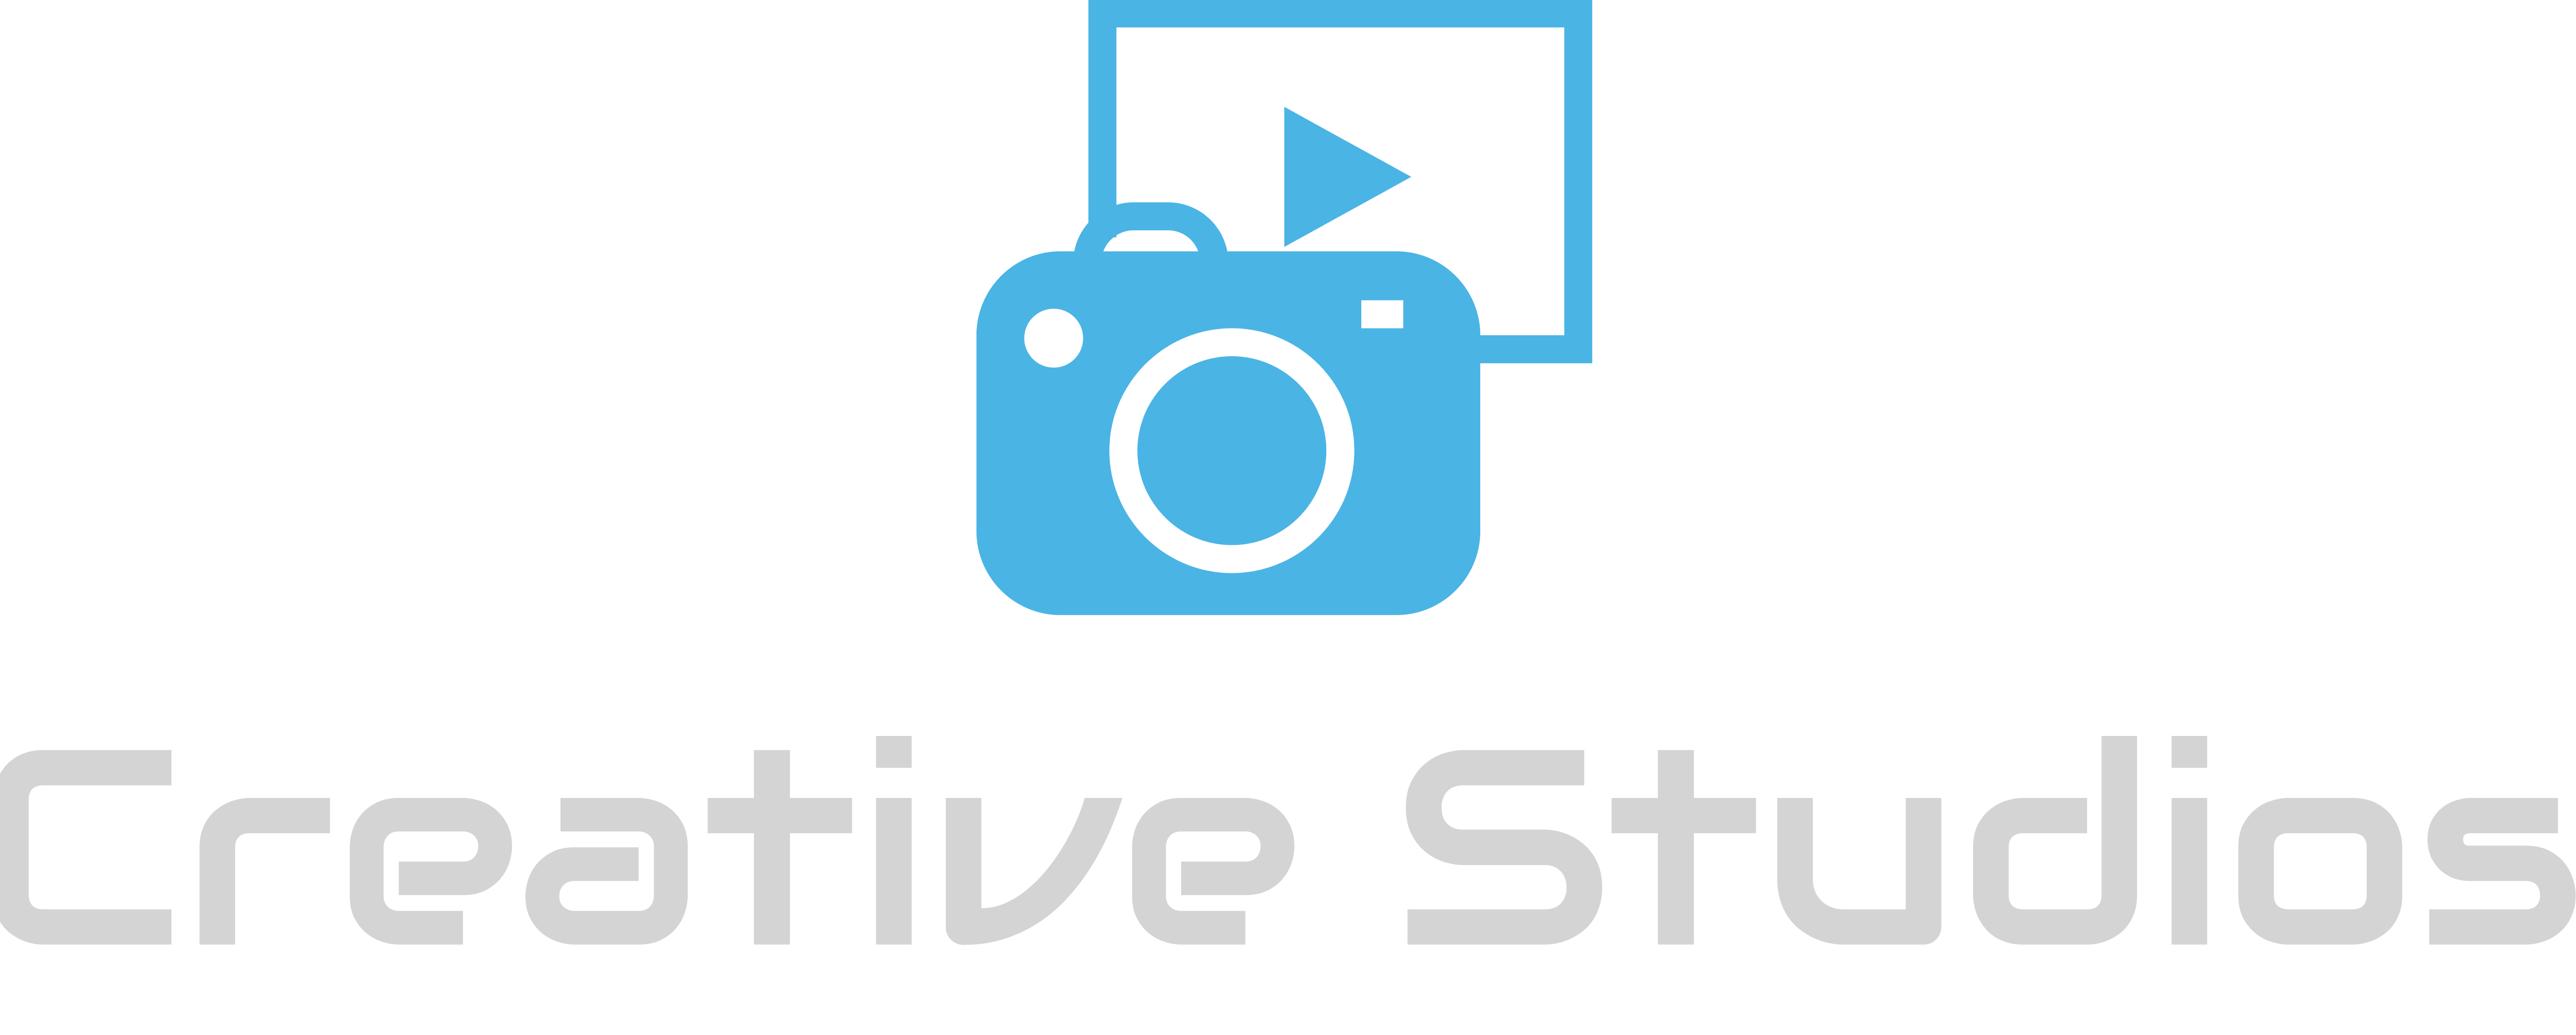 Creative Studios Logo 1